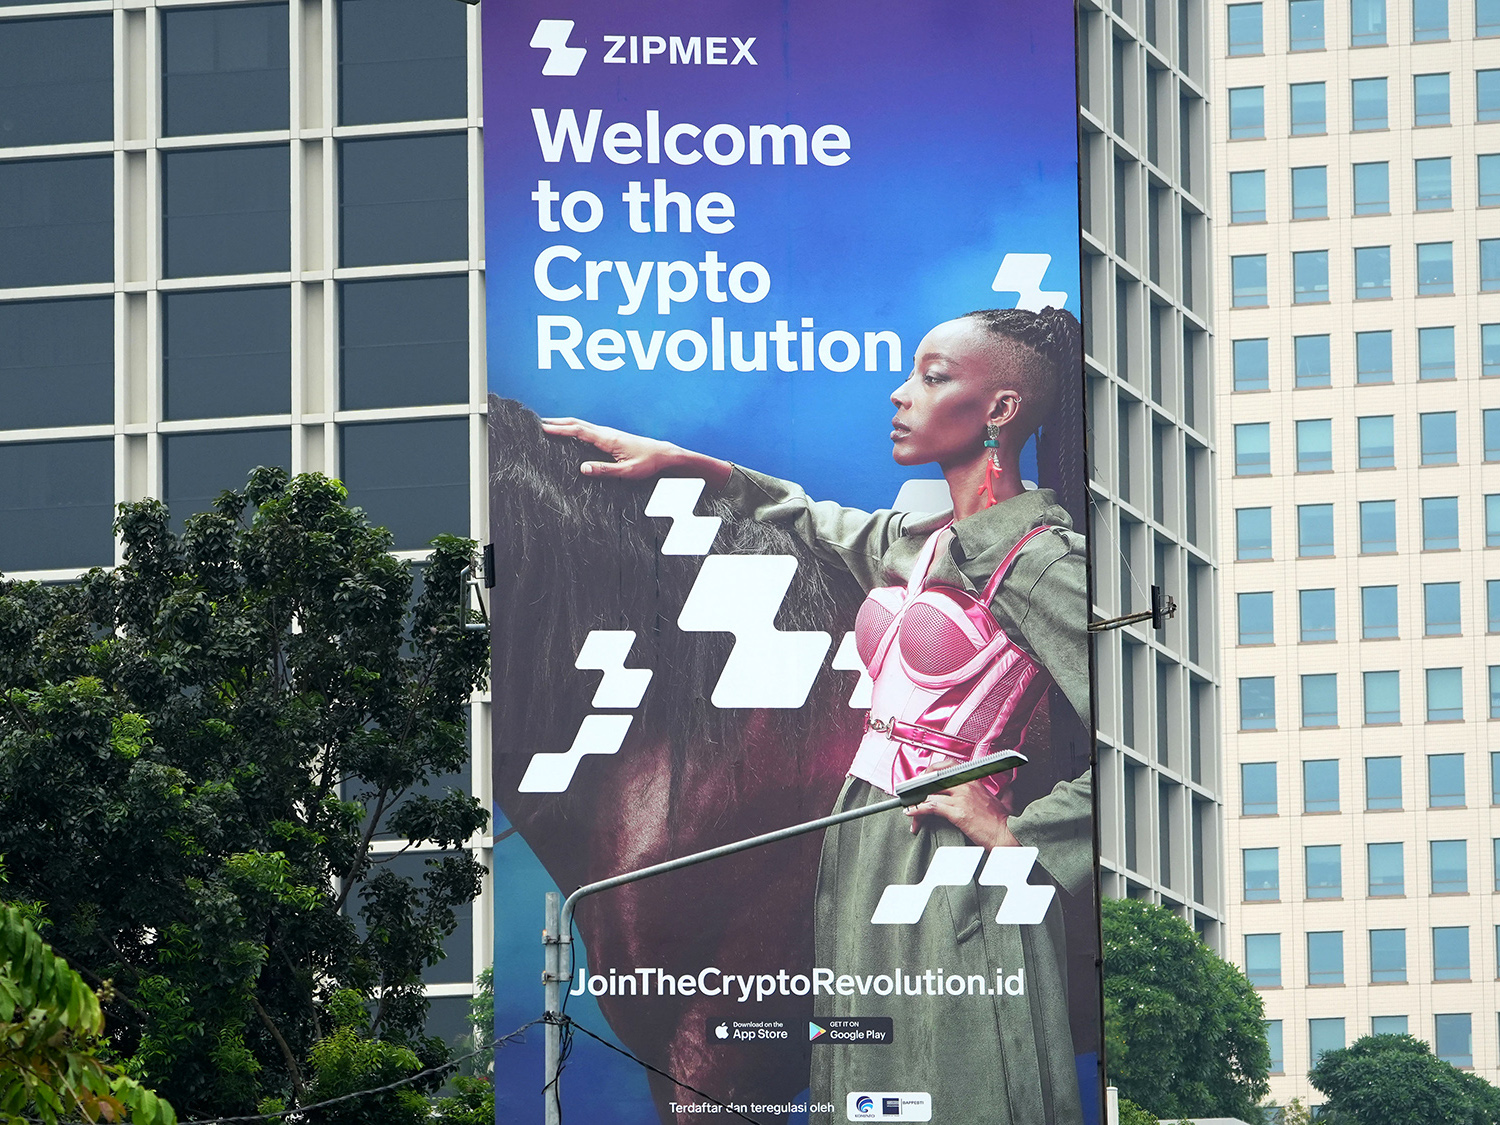 Revolutionary Samsung Sam Ads: The Future of Advertising